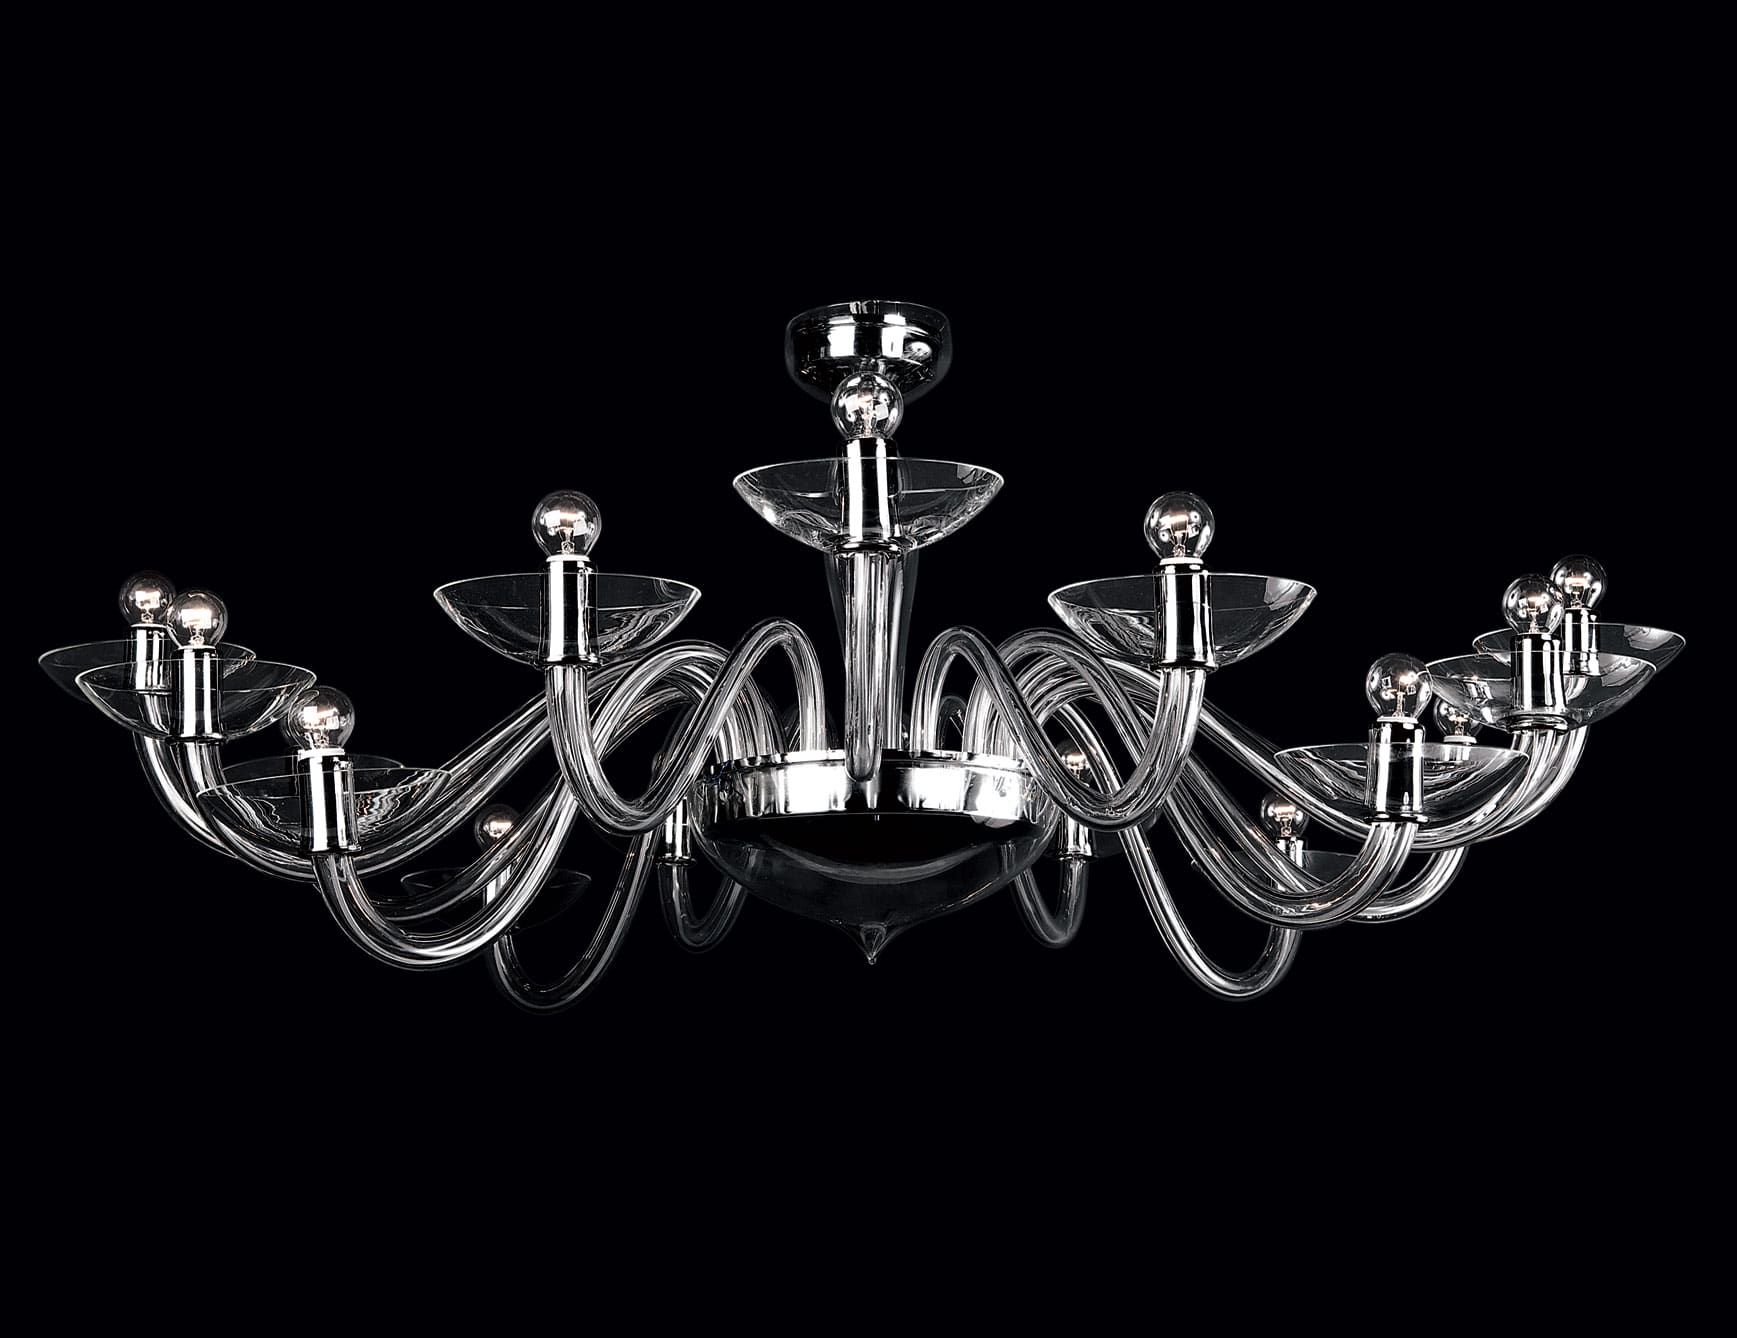 Octopus modern Italian chandelier with clear glass